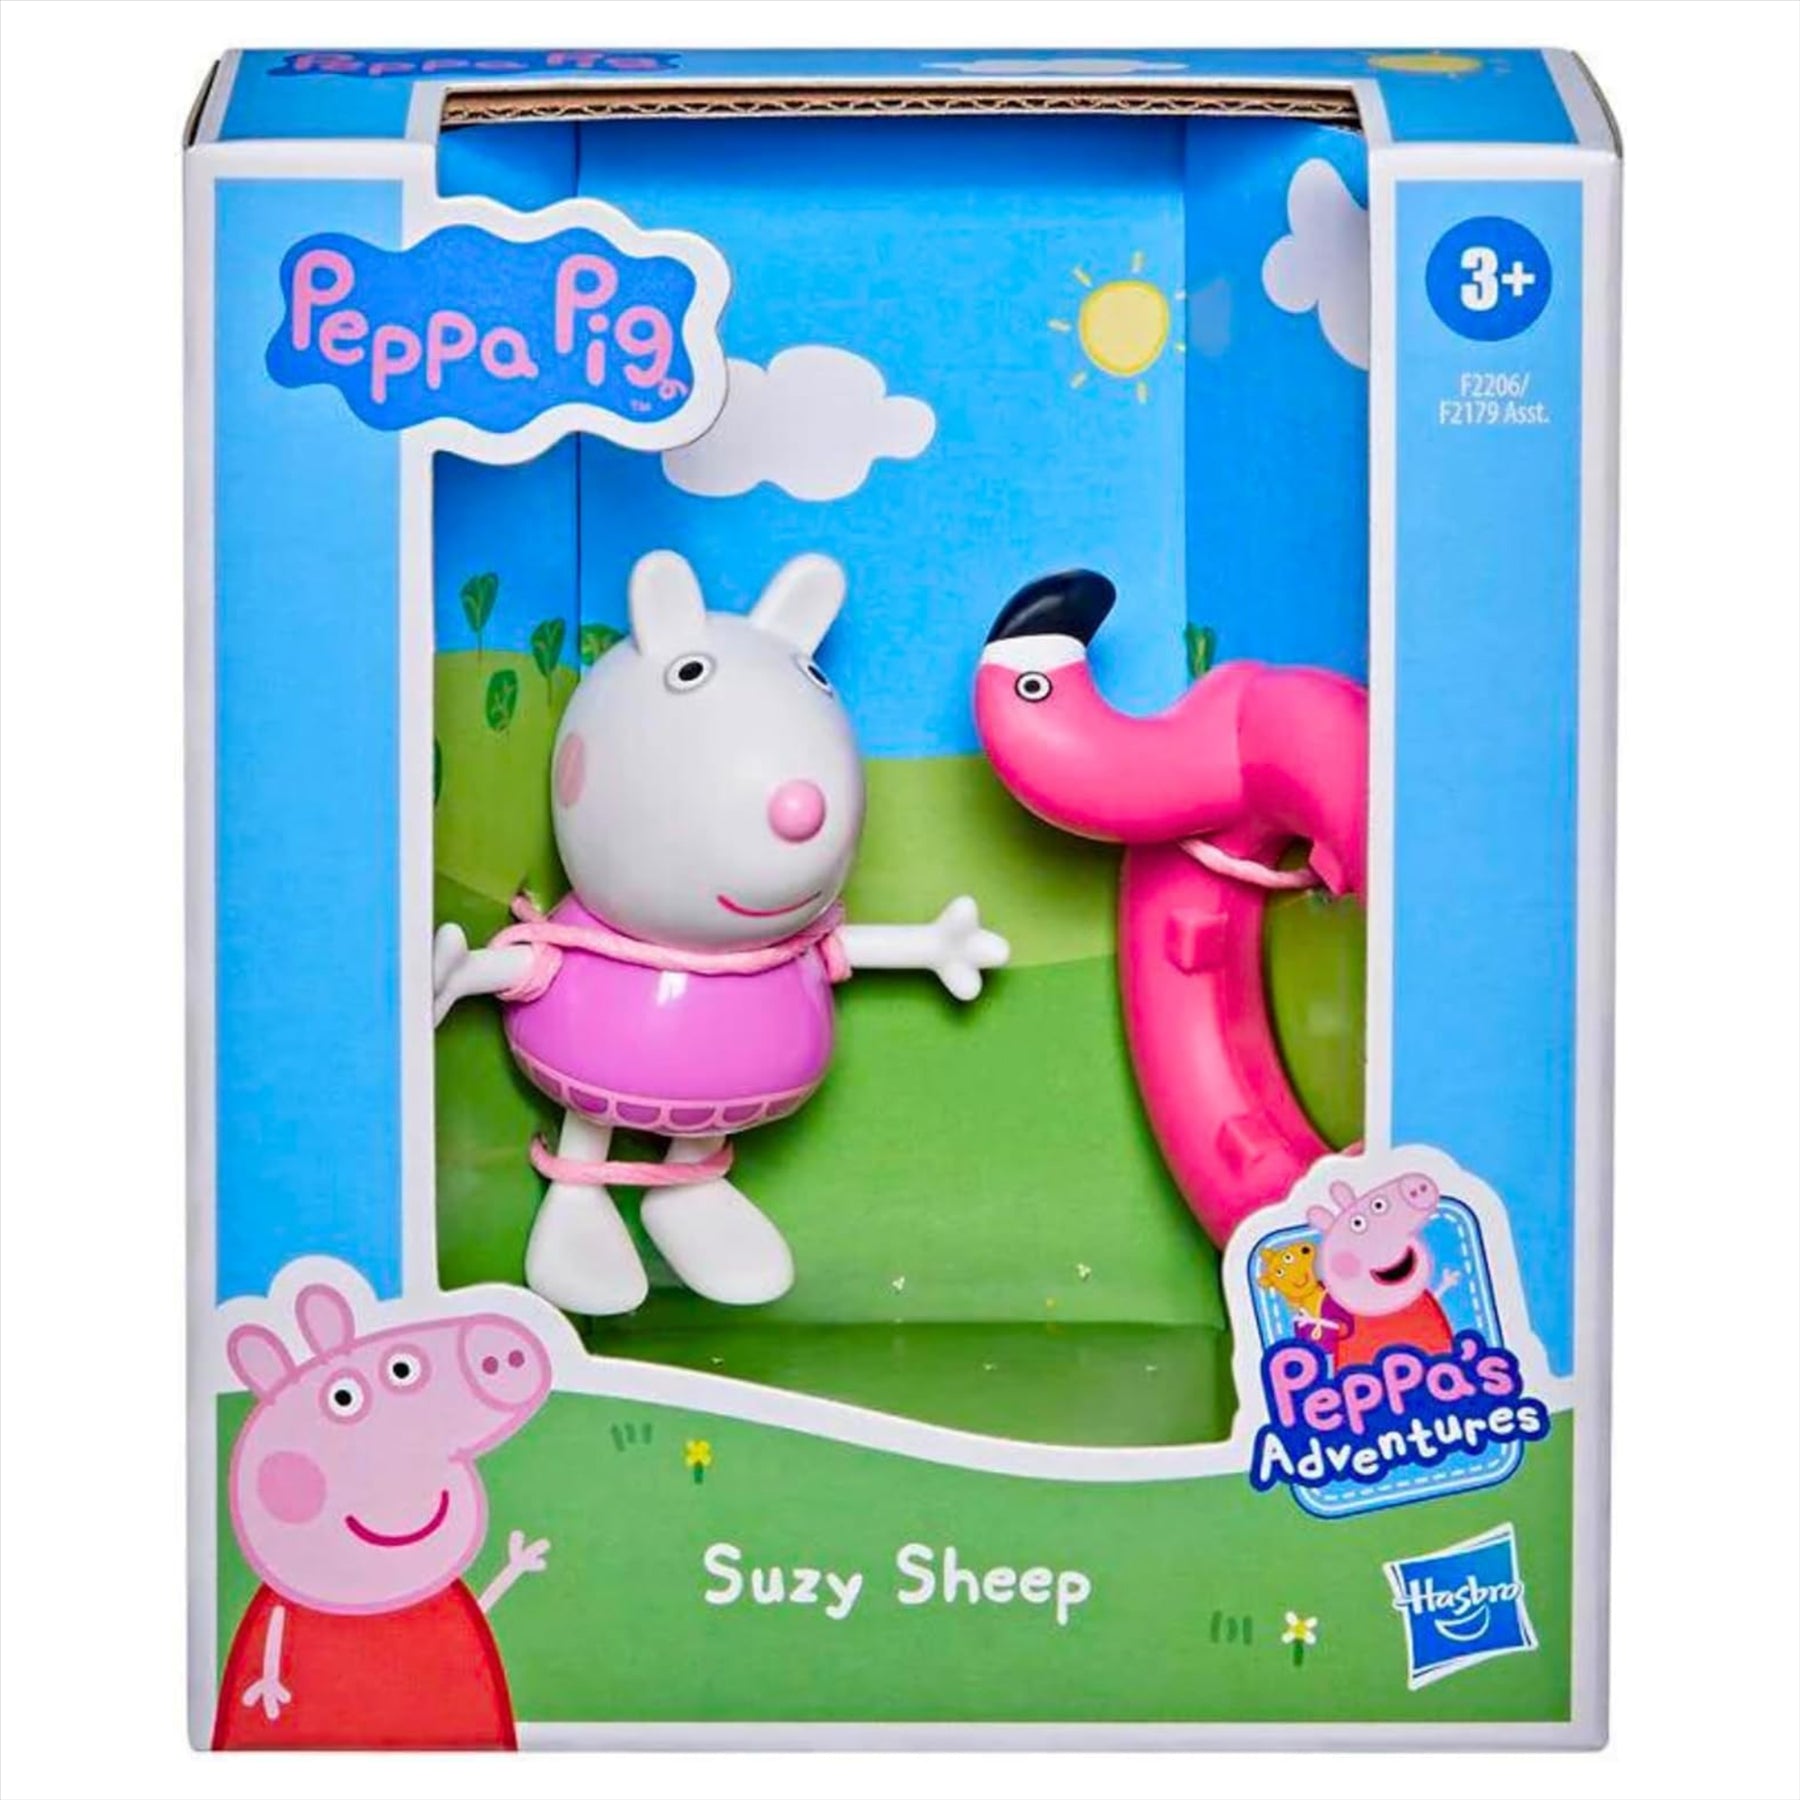 Peppa Pig - 3" 8cm Articulated Figure & Accessory - Danny Dog & Suzy Sheep 2 Pack - Toptoys2u